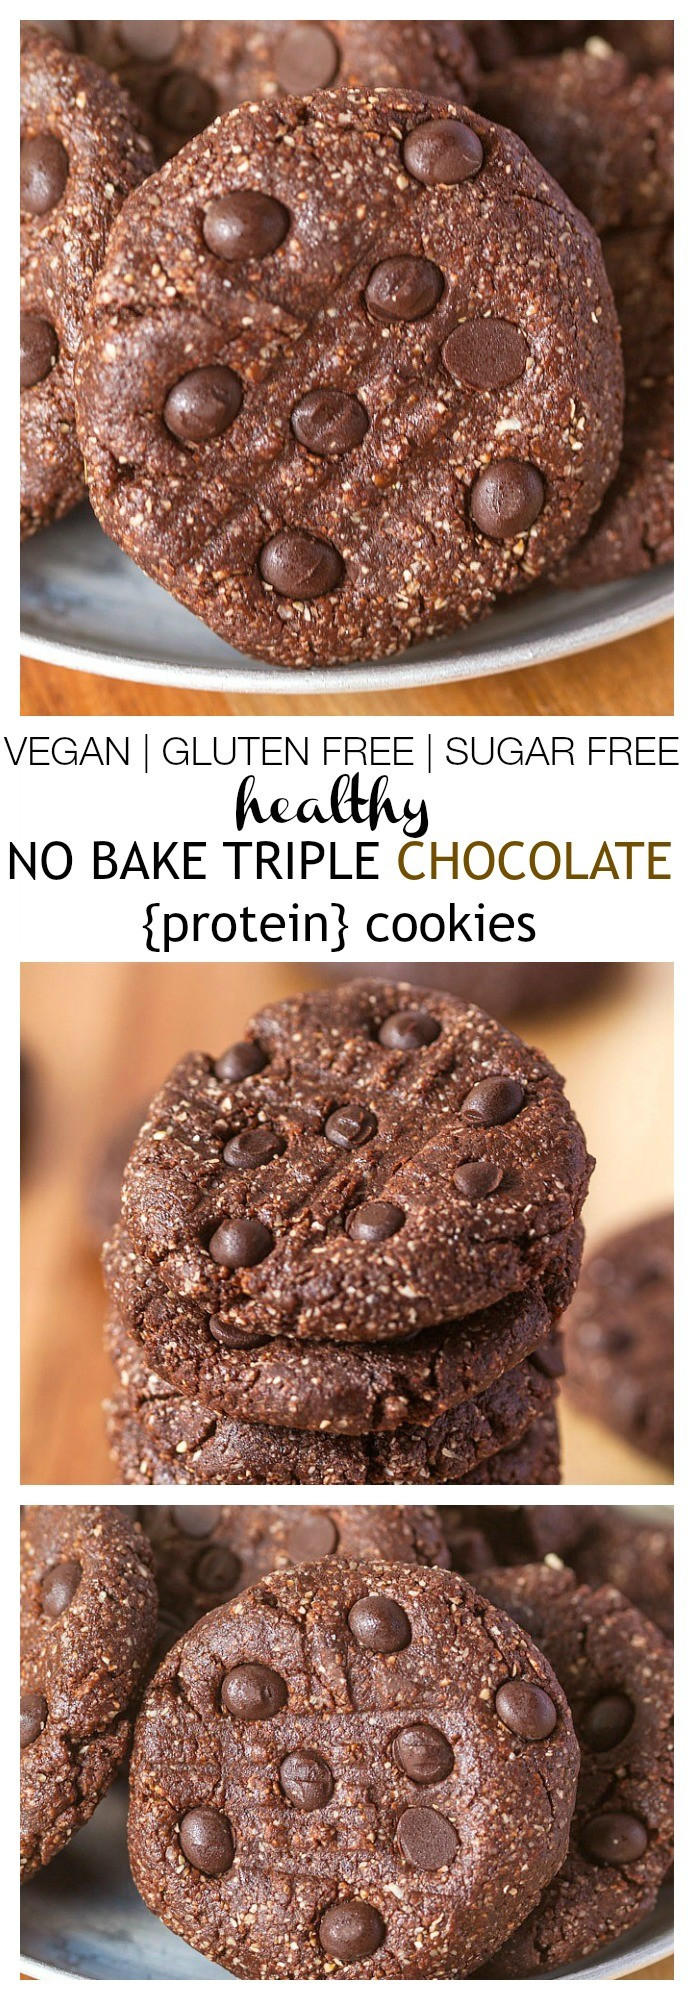 Healthy No Bake Cookies Sugar Free
 Healthy No Bake Triple Chocolate Protein Cookies